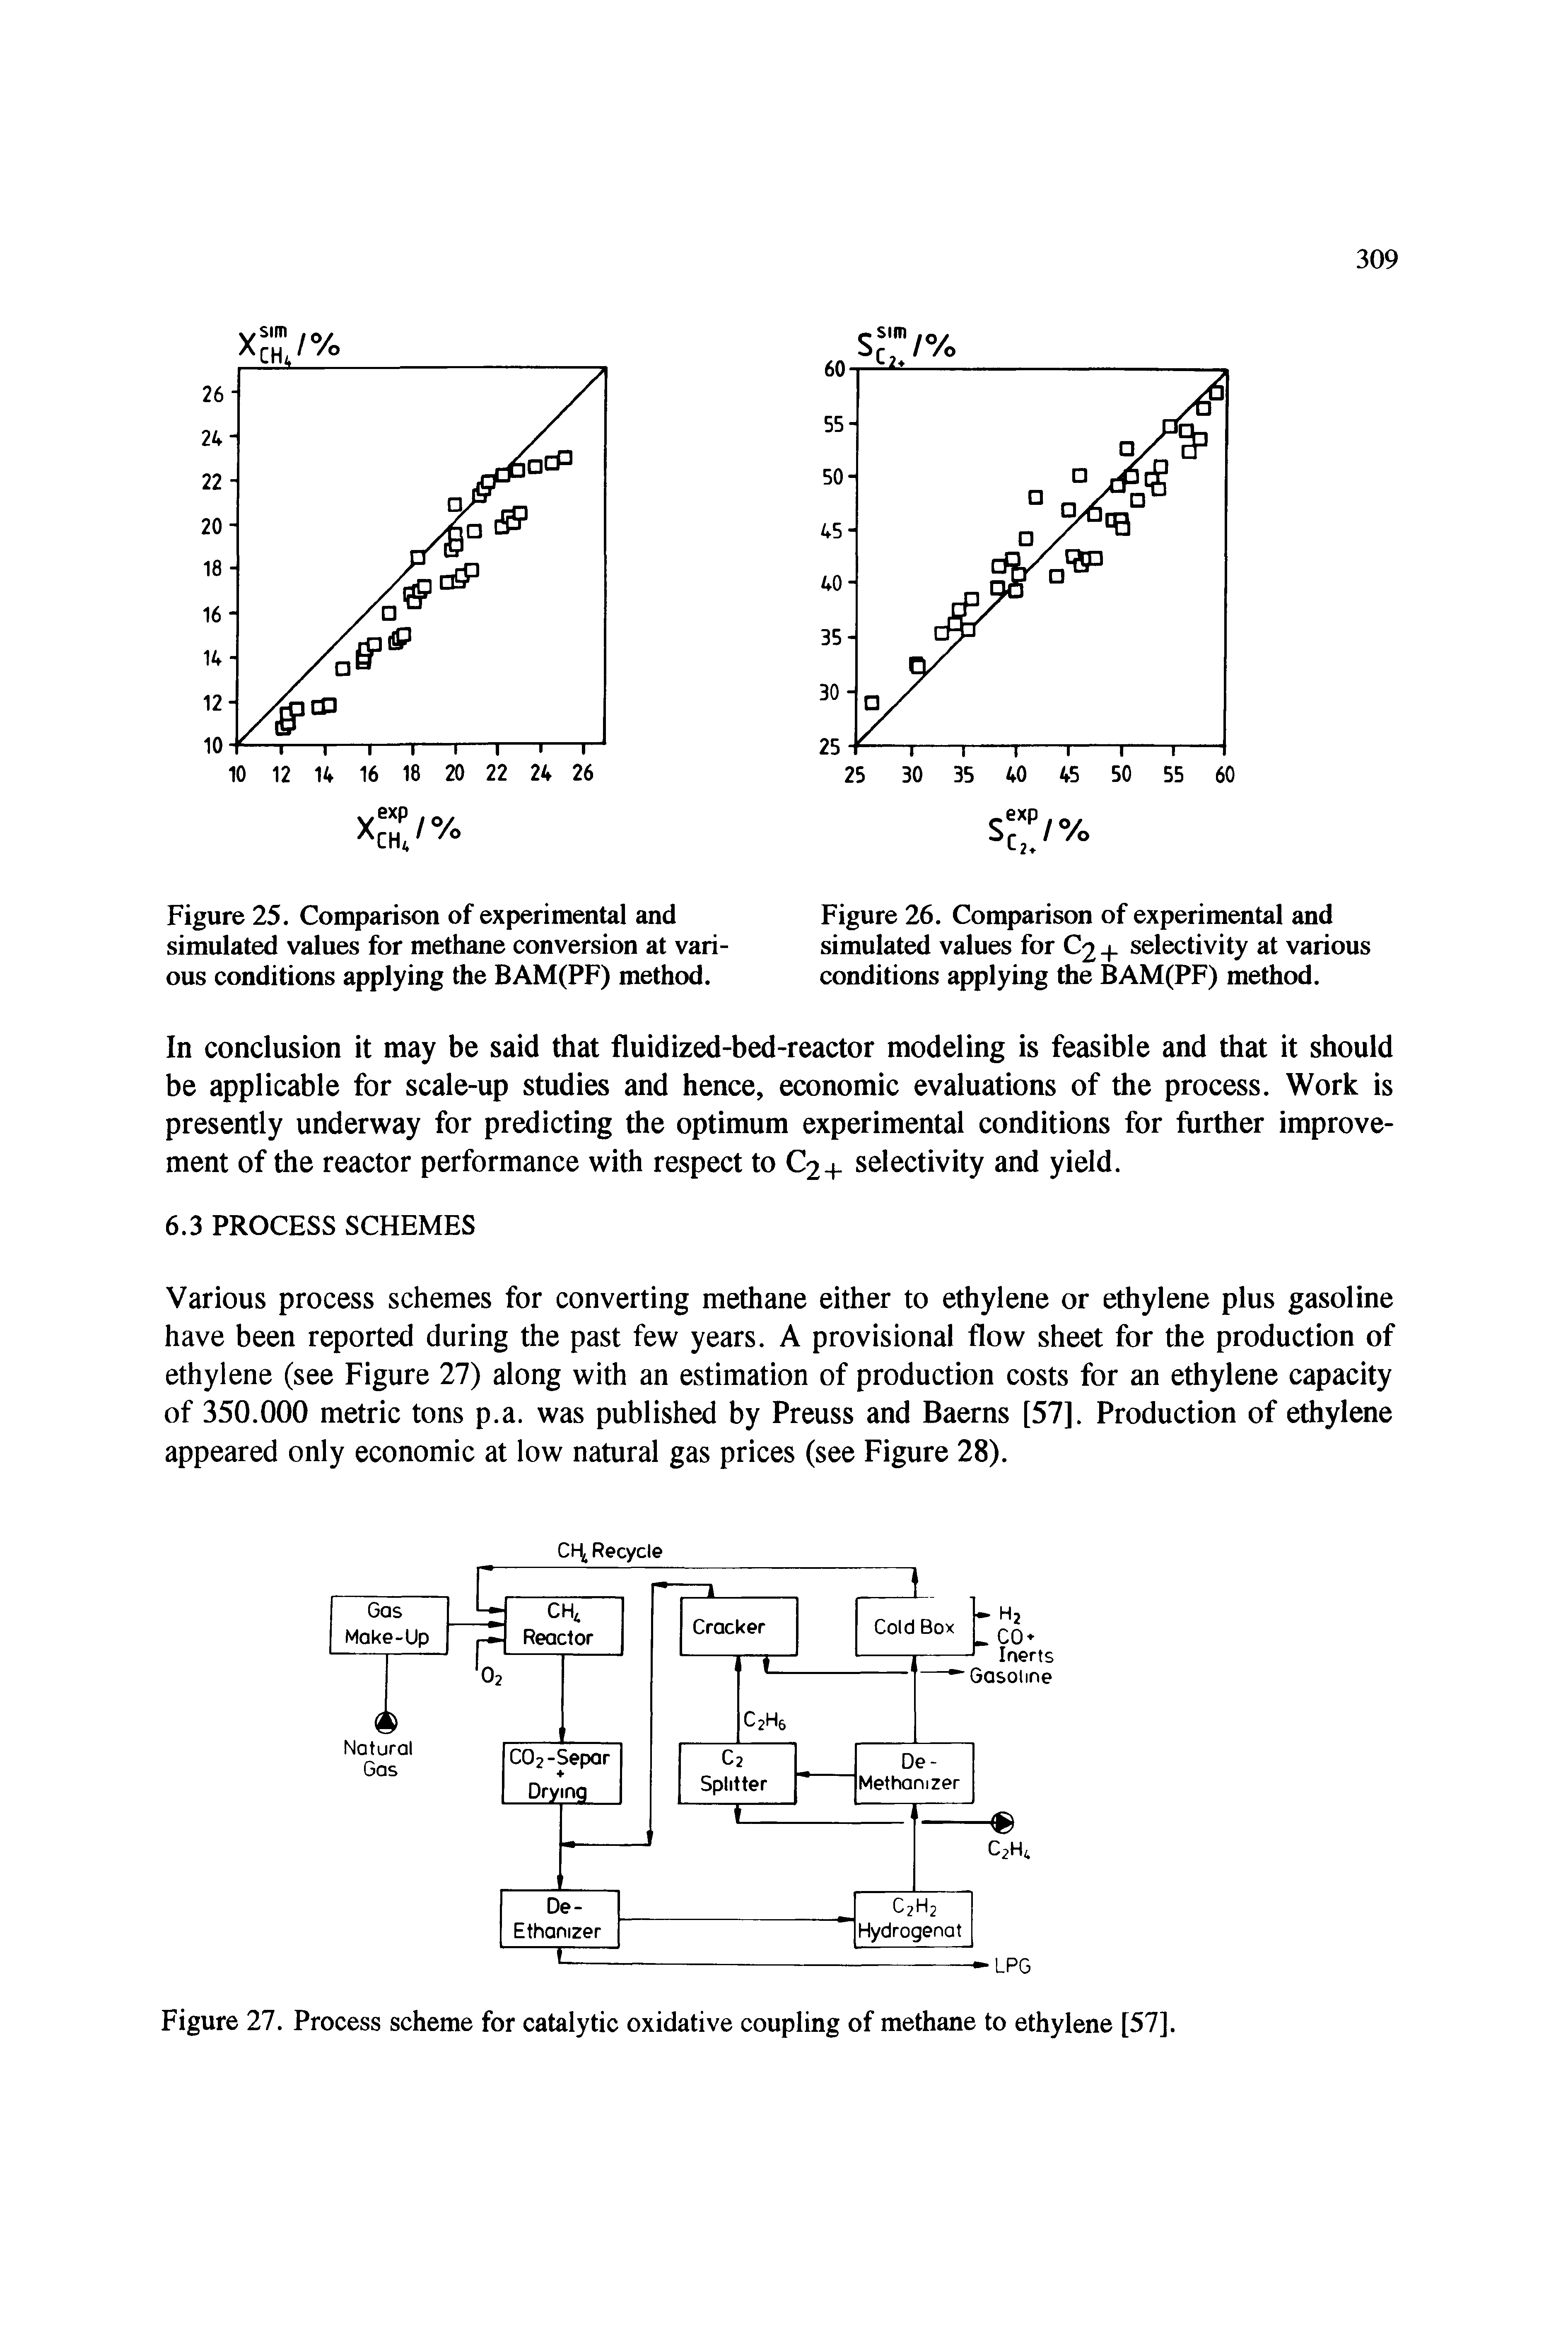 Figure 27. Process scheme for catalytic oxidative coupling of methane to ethylene [57].